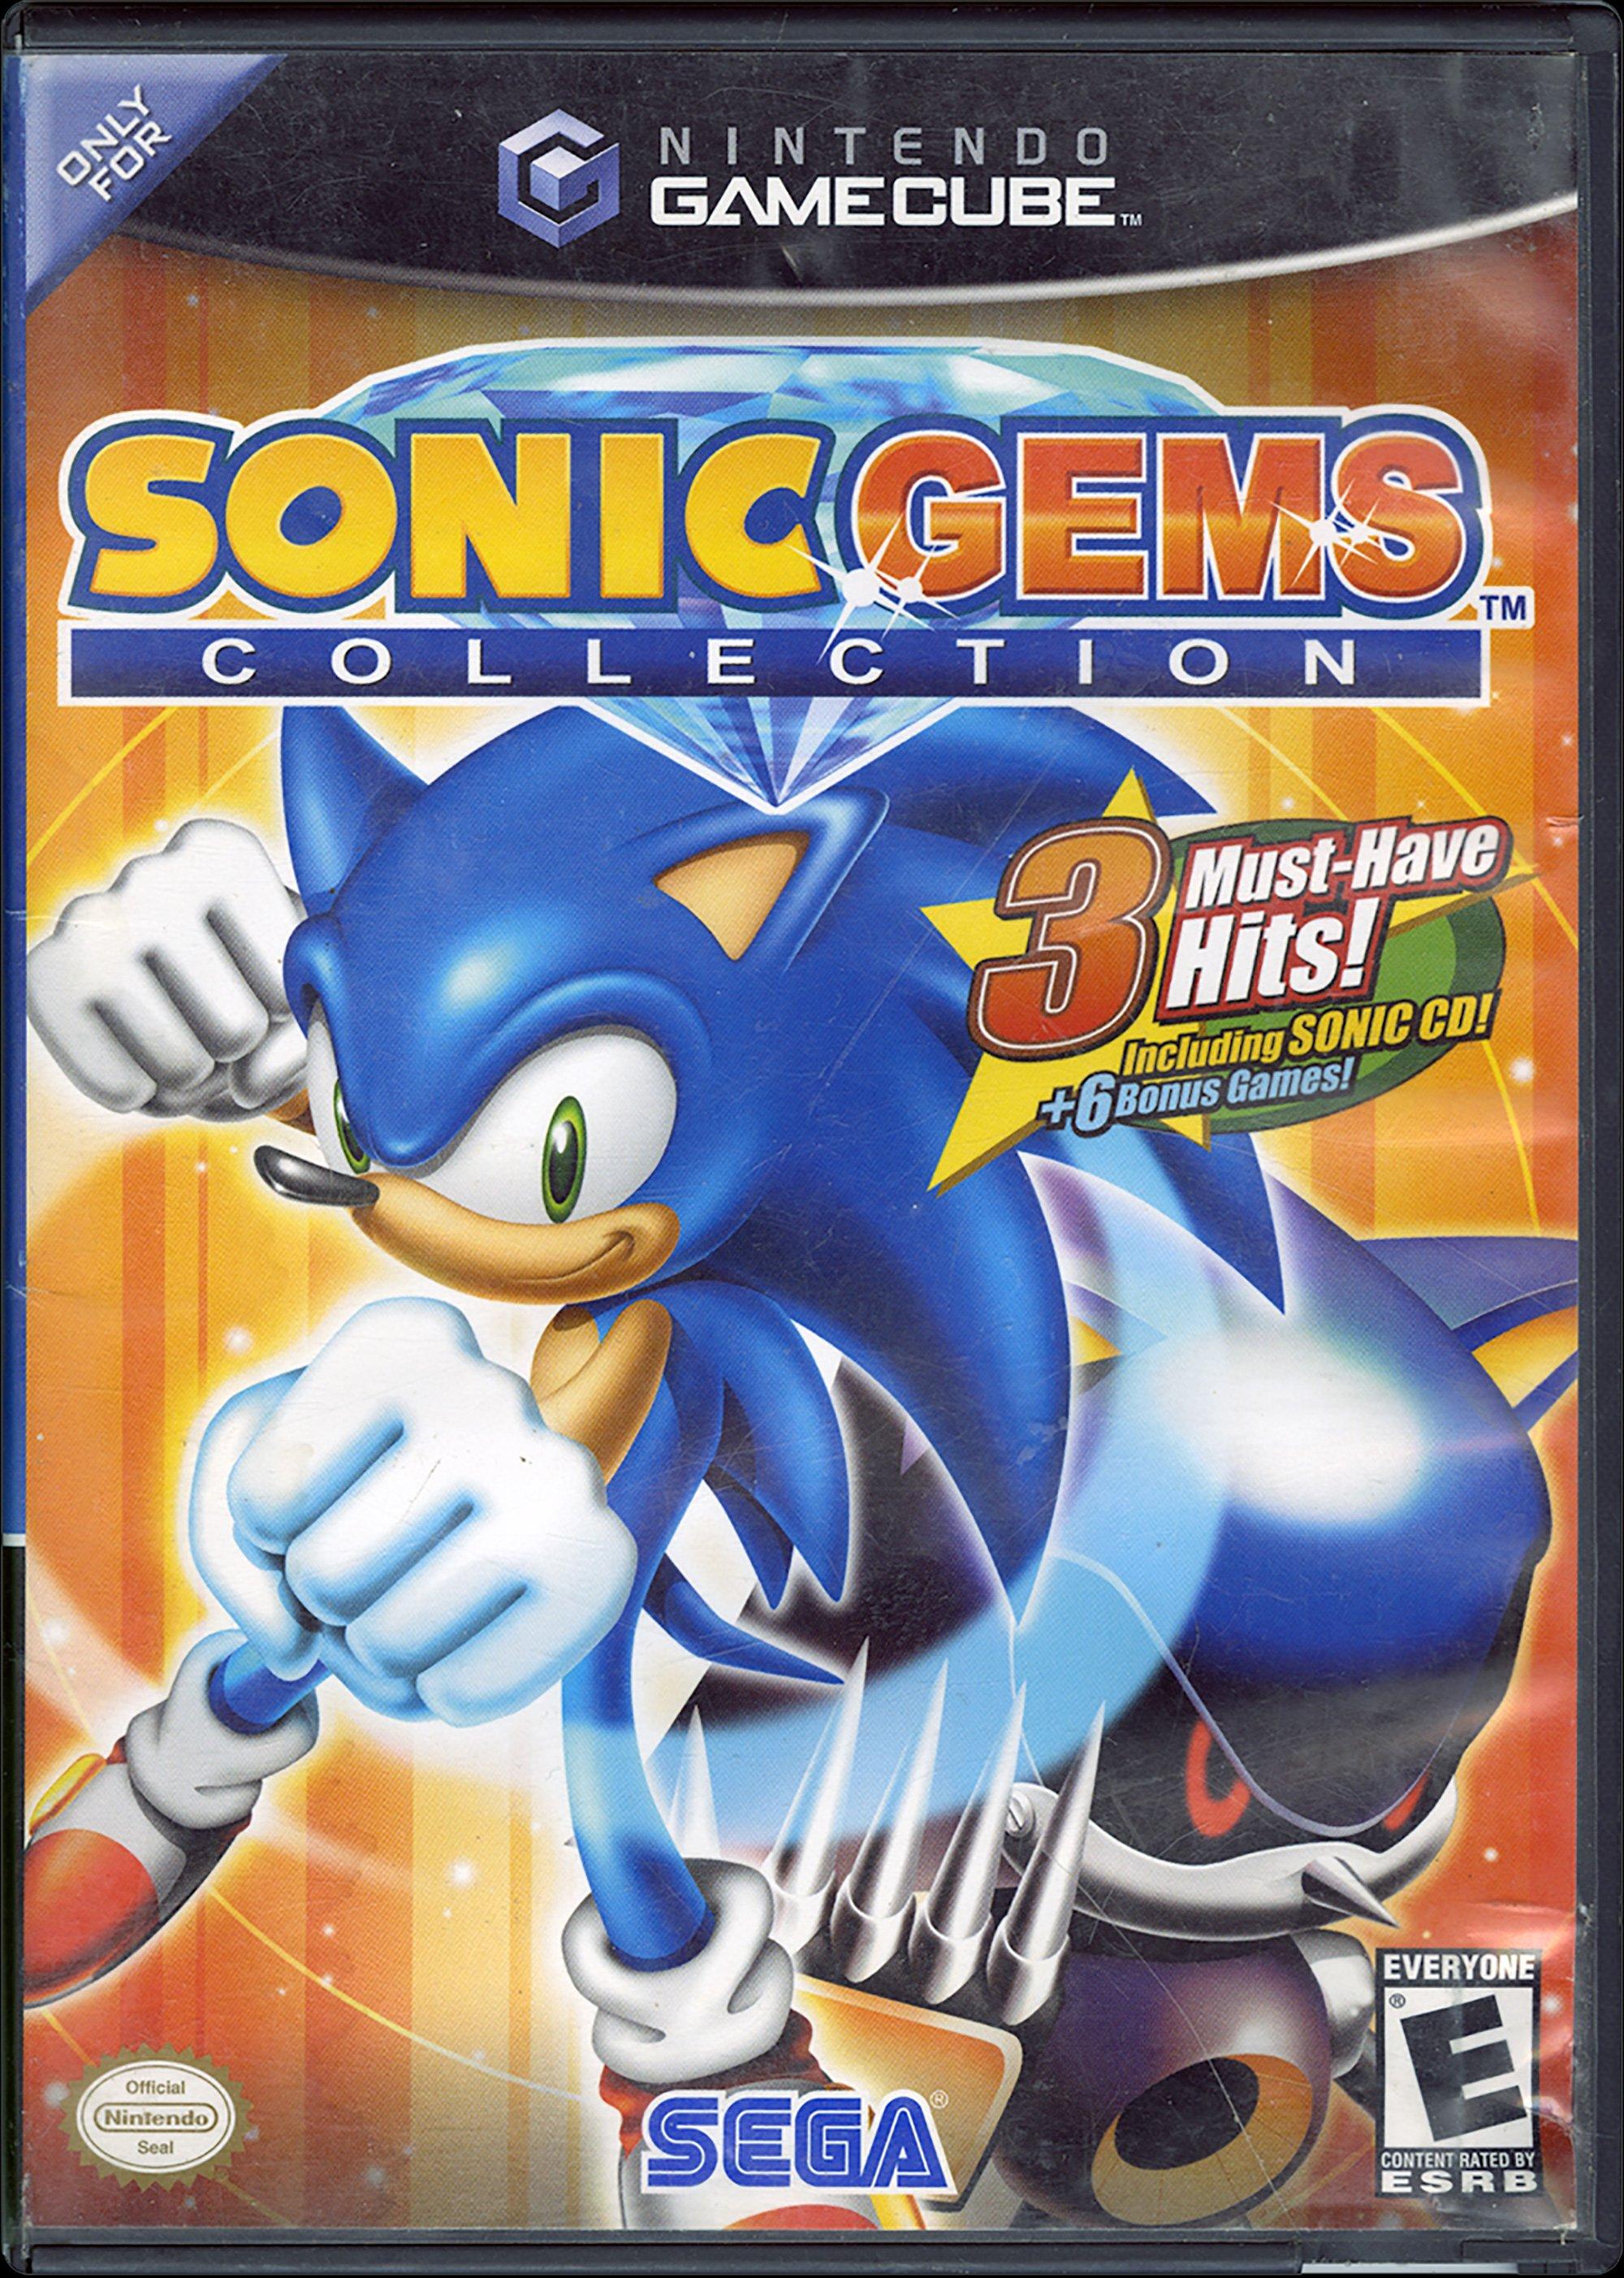 SEGA Sonic Chaos Video Games for sale